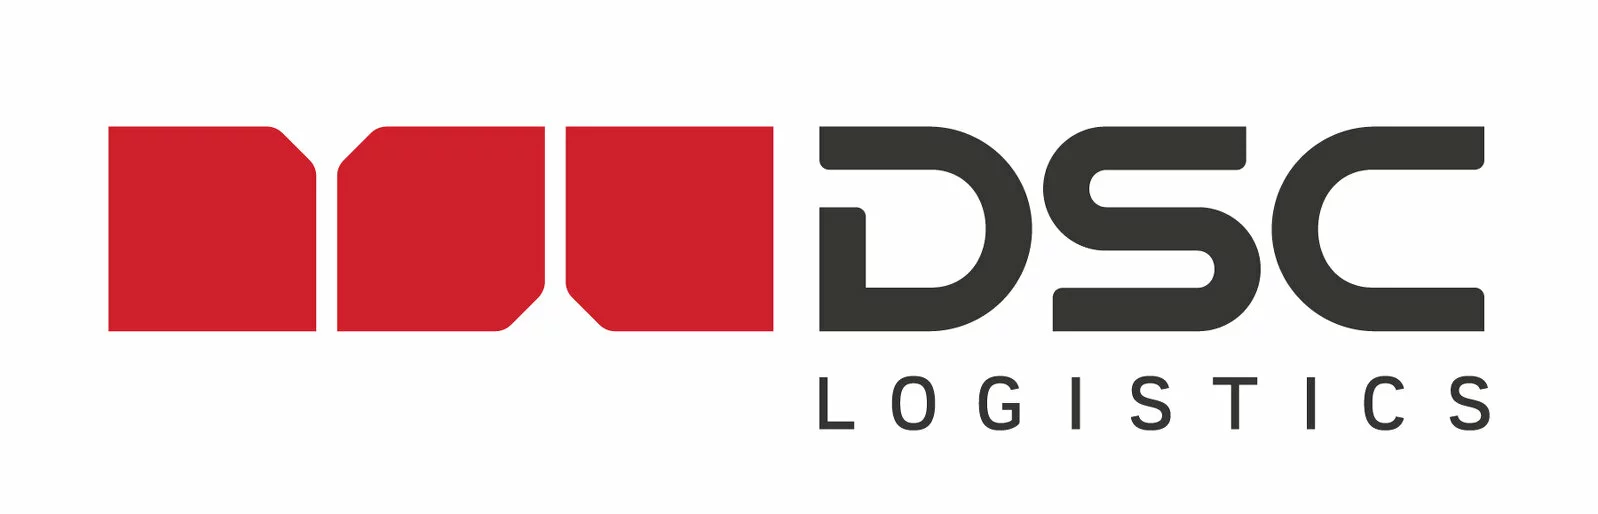 DSC Logistics Logo